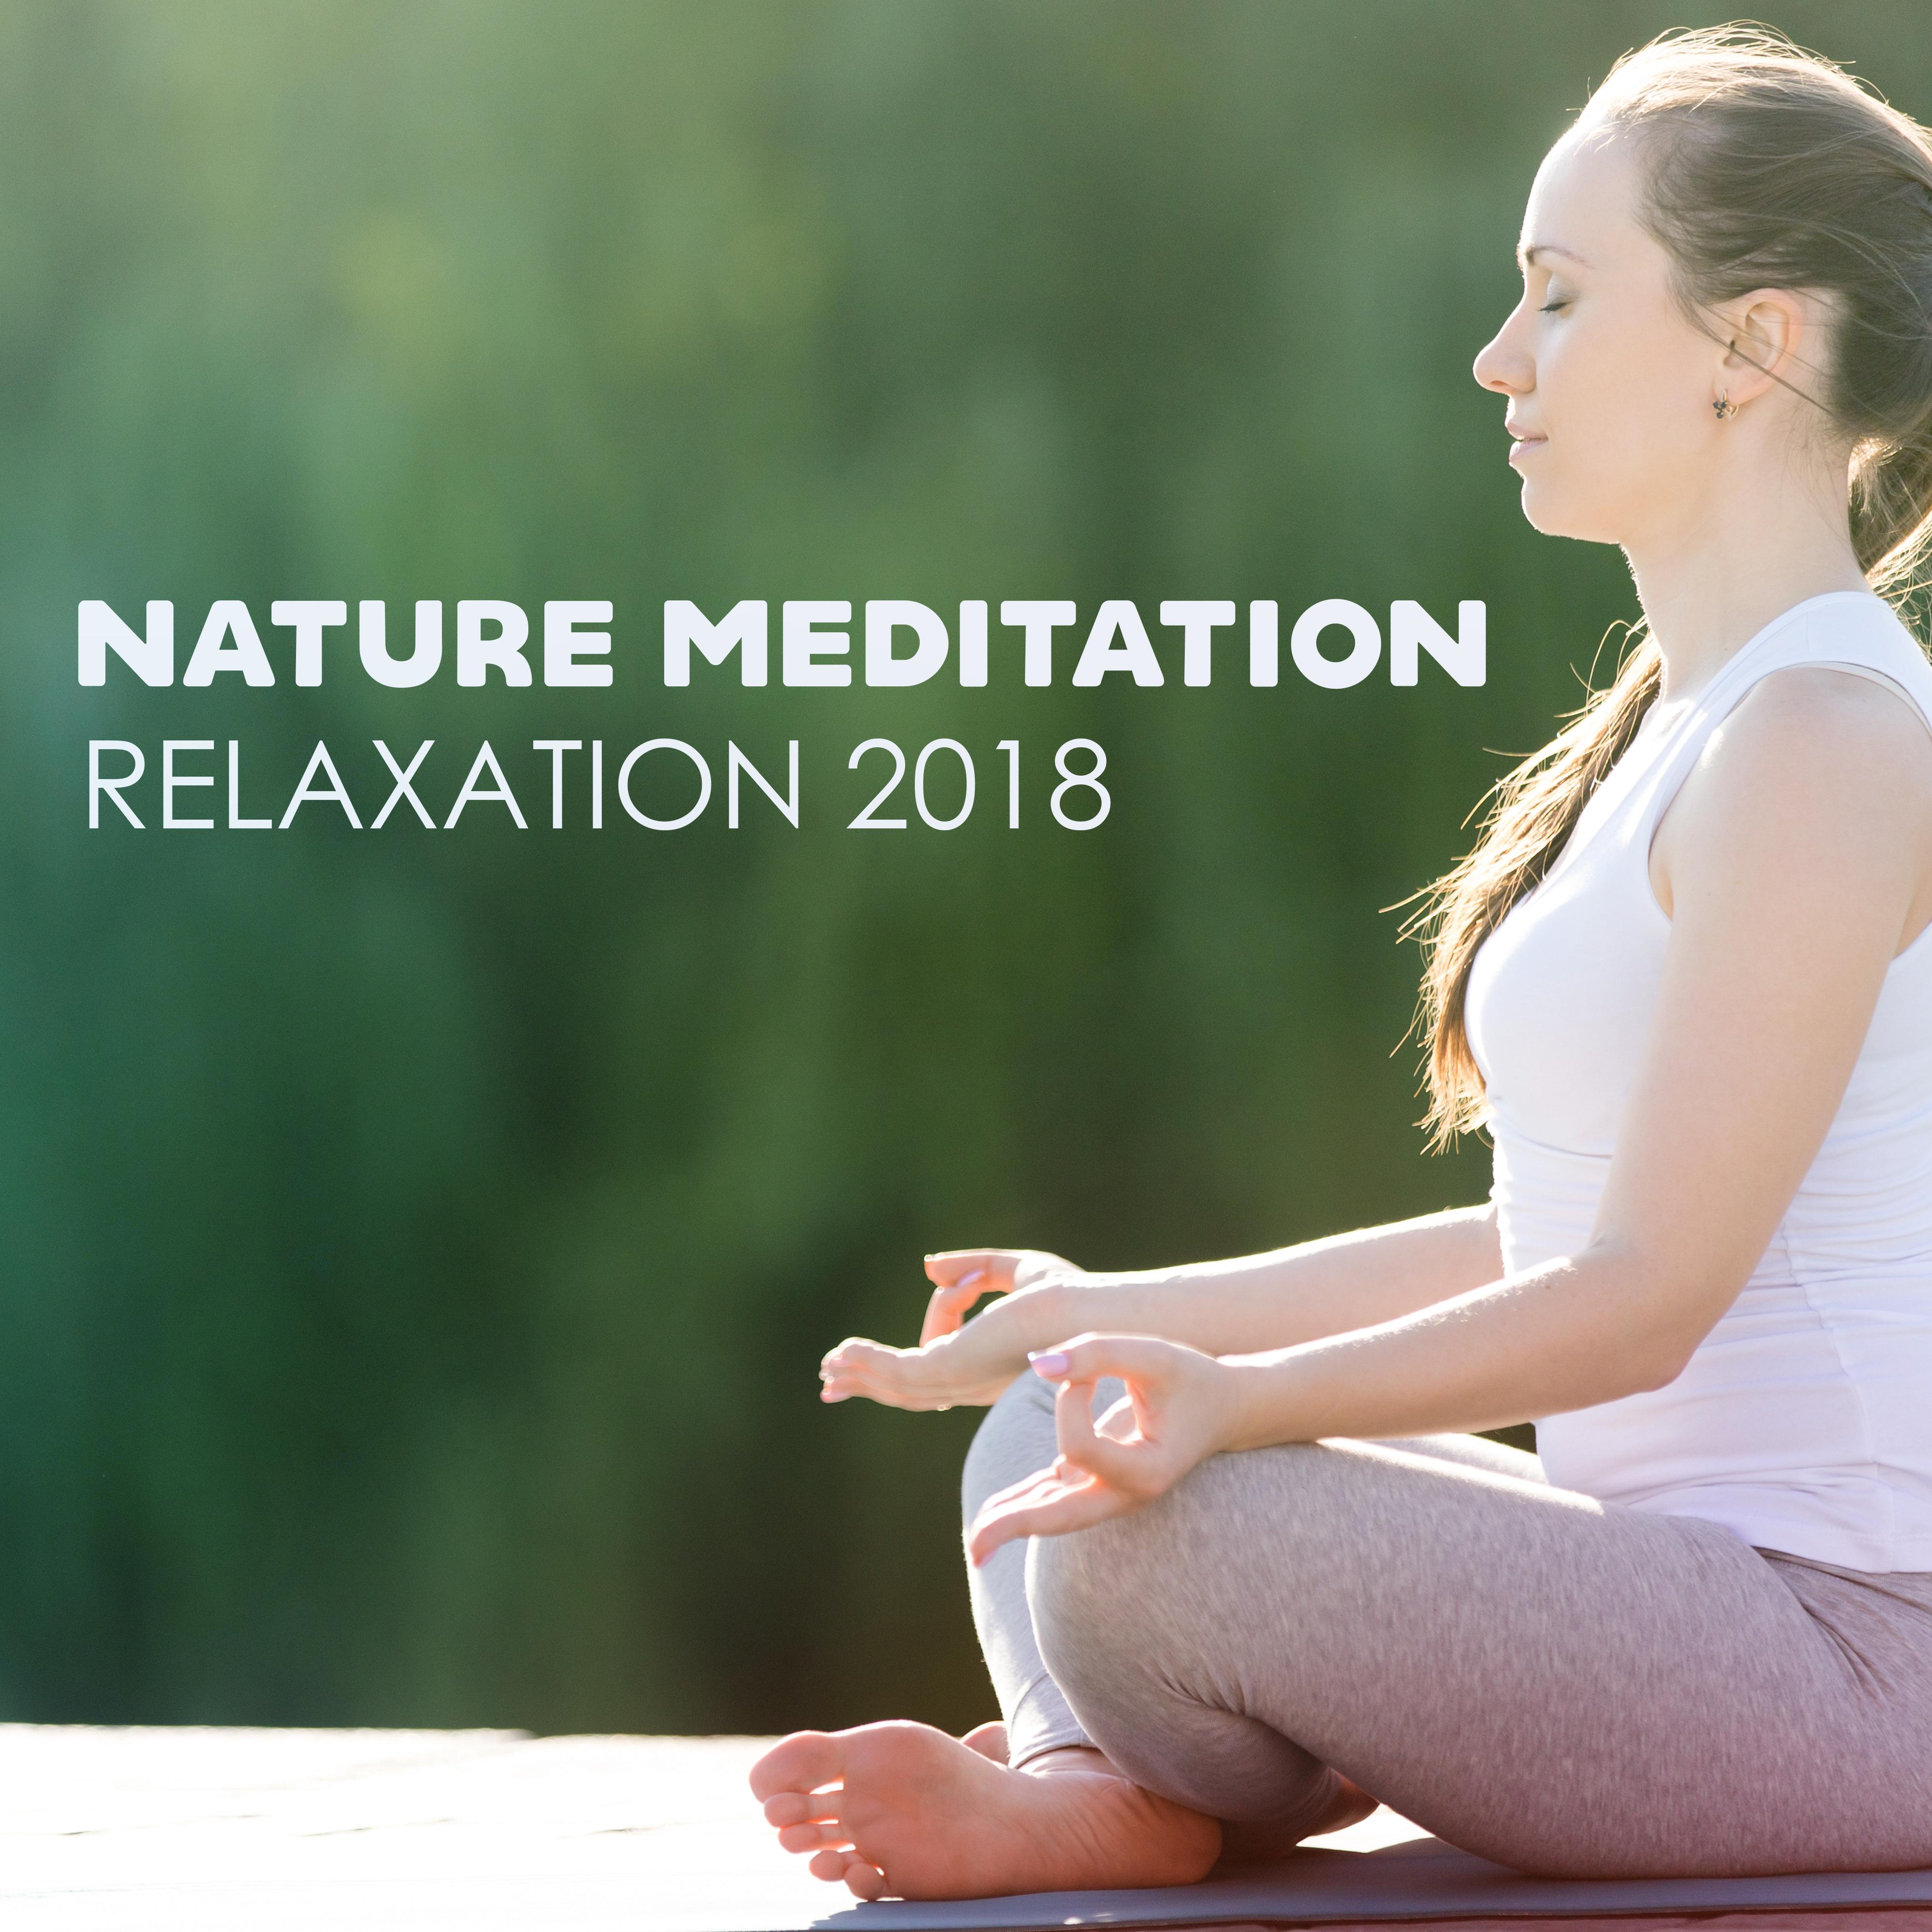 Nature Meditation Relaxation 2018